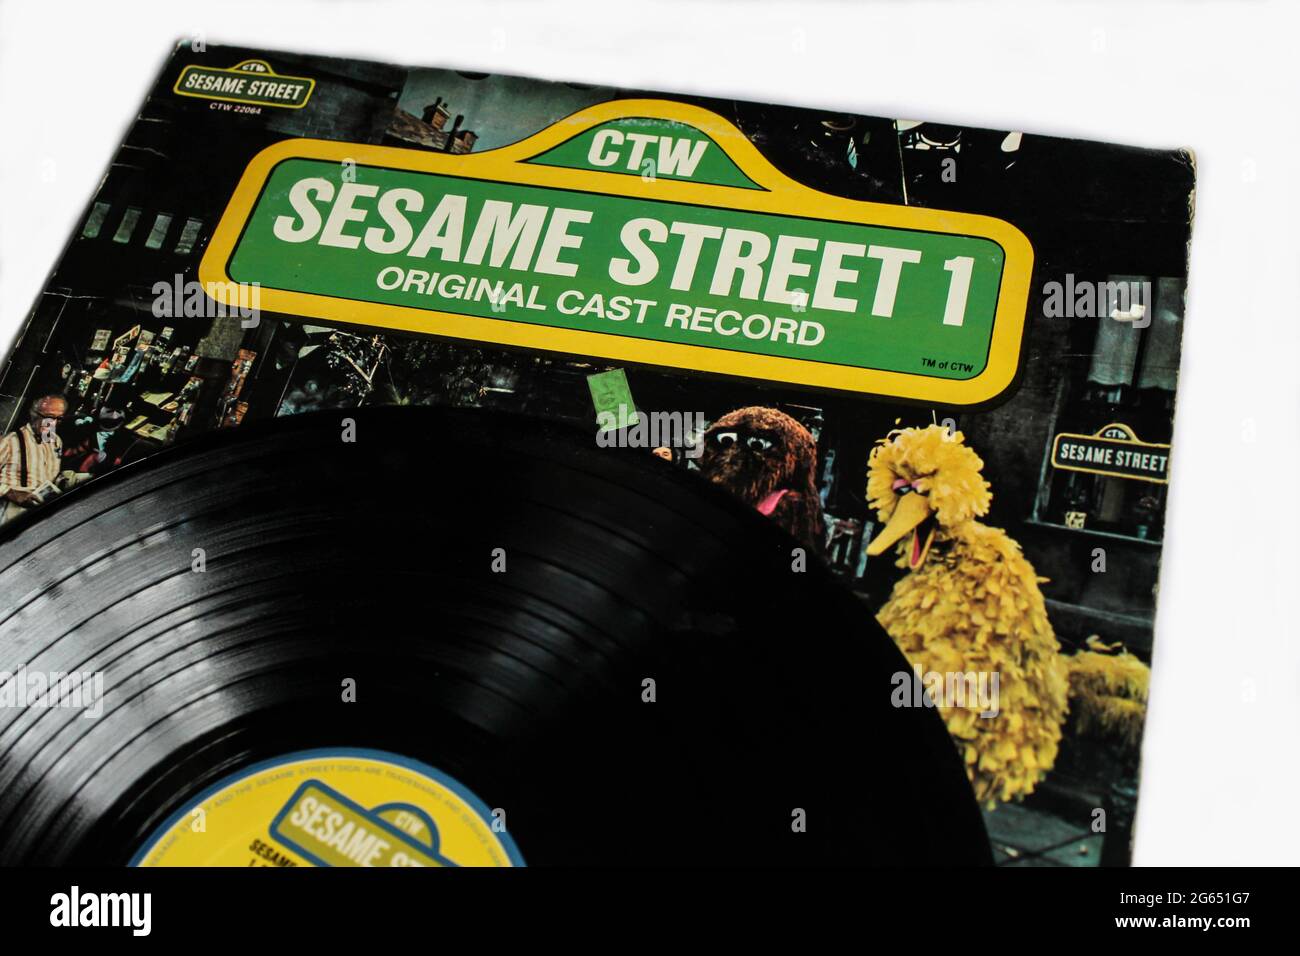 The Sesame Street Book Record: Original Cast from 1974. Album on vinyl record LP disc. Album cover Stock Photo